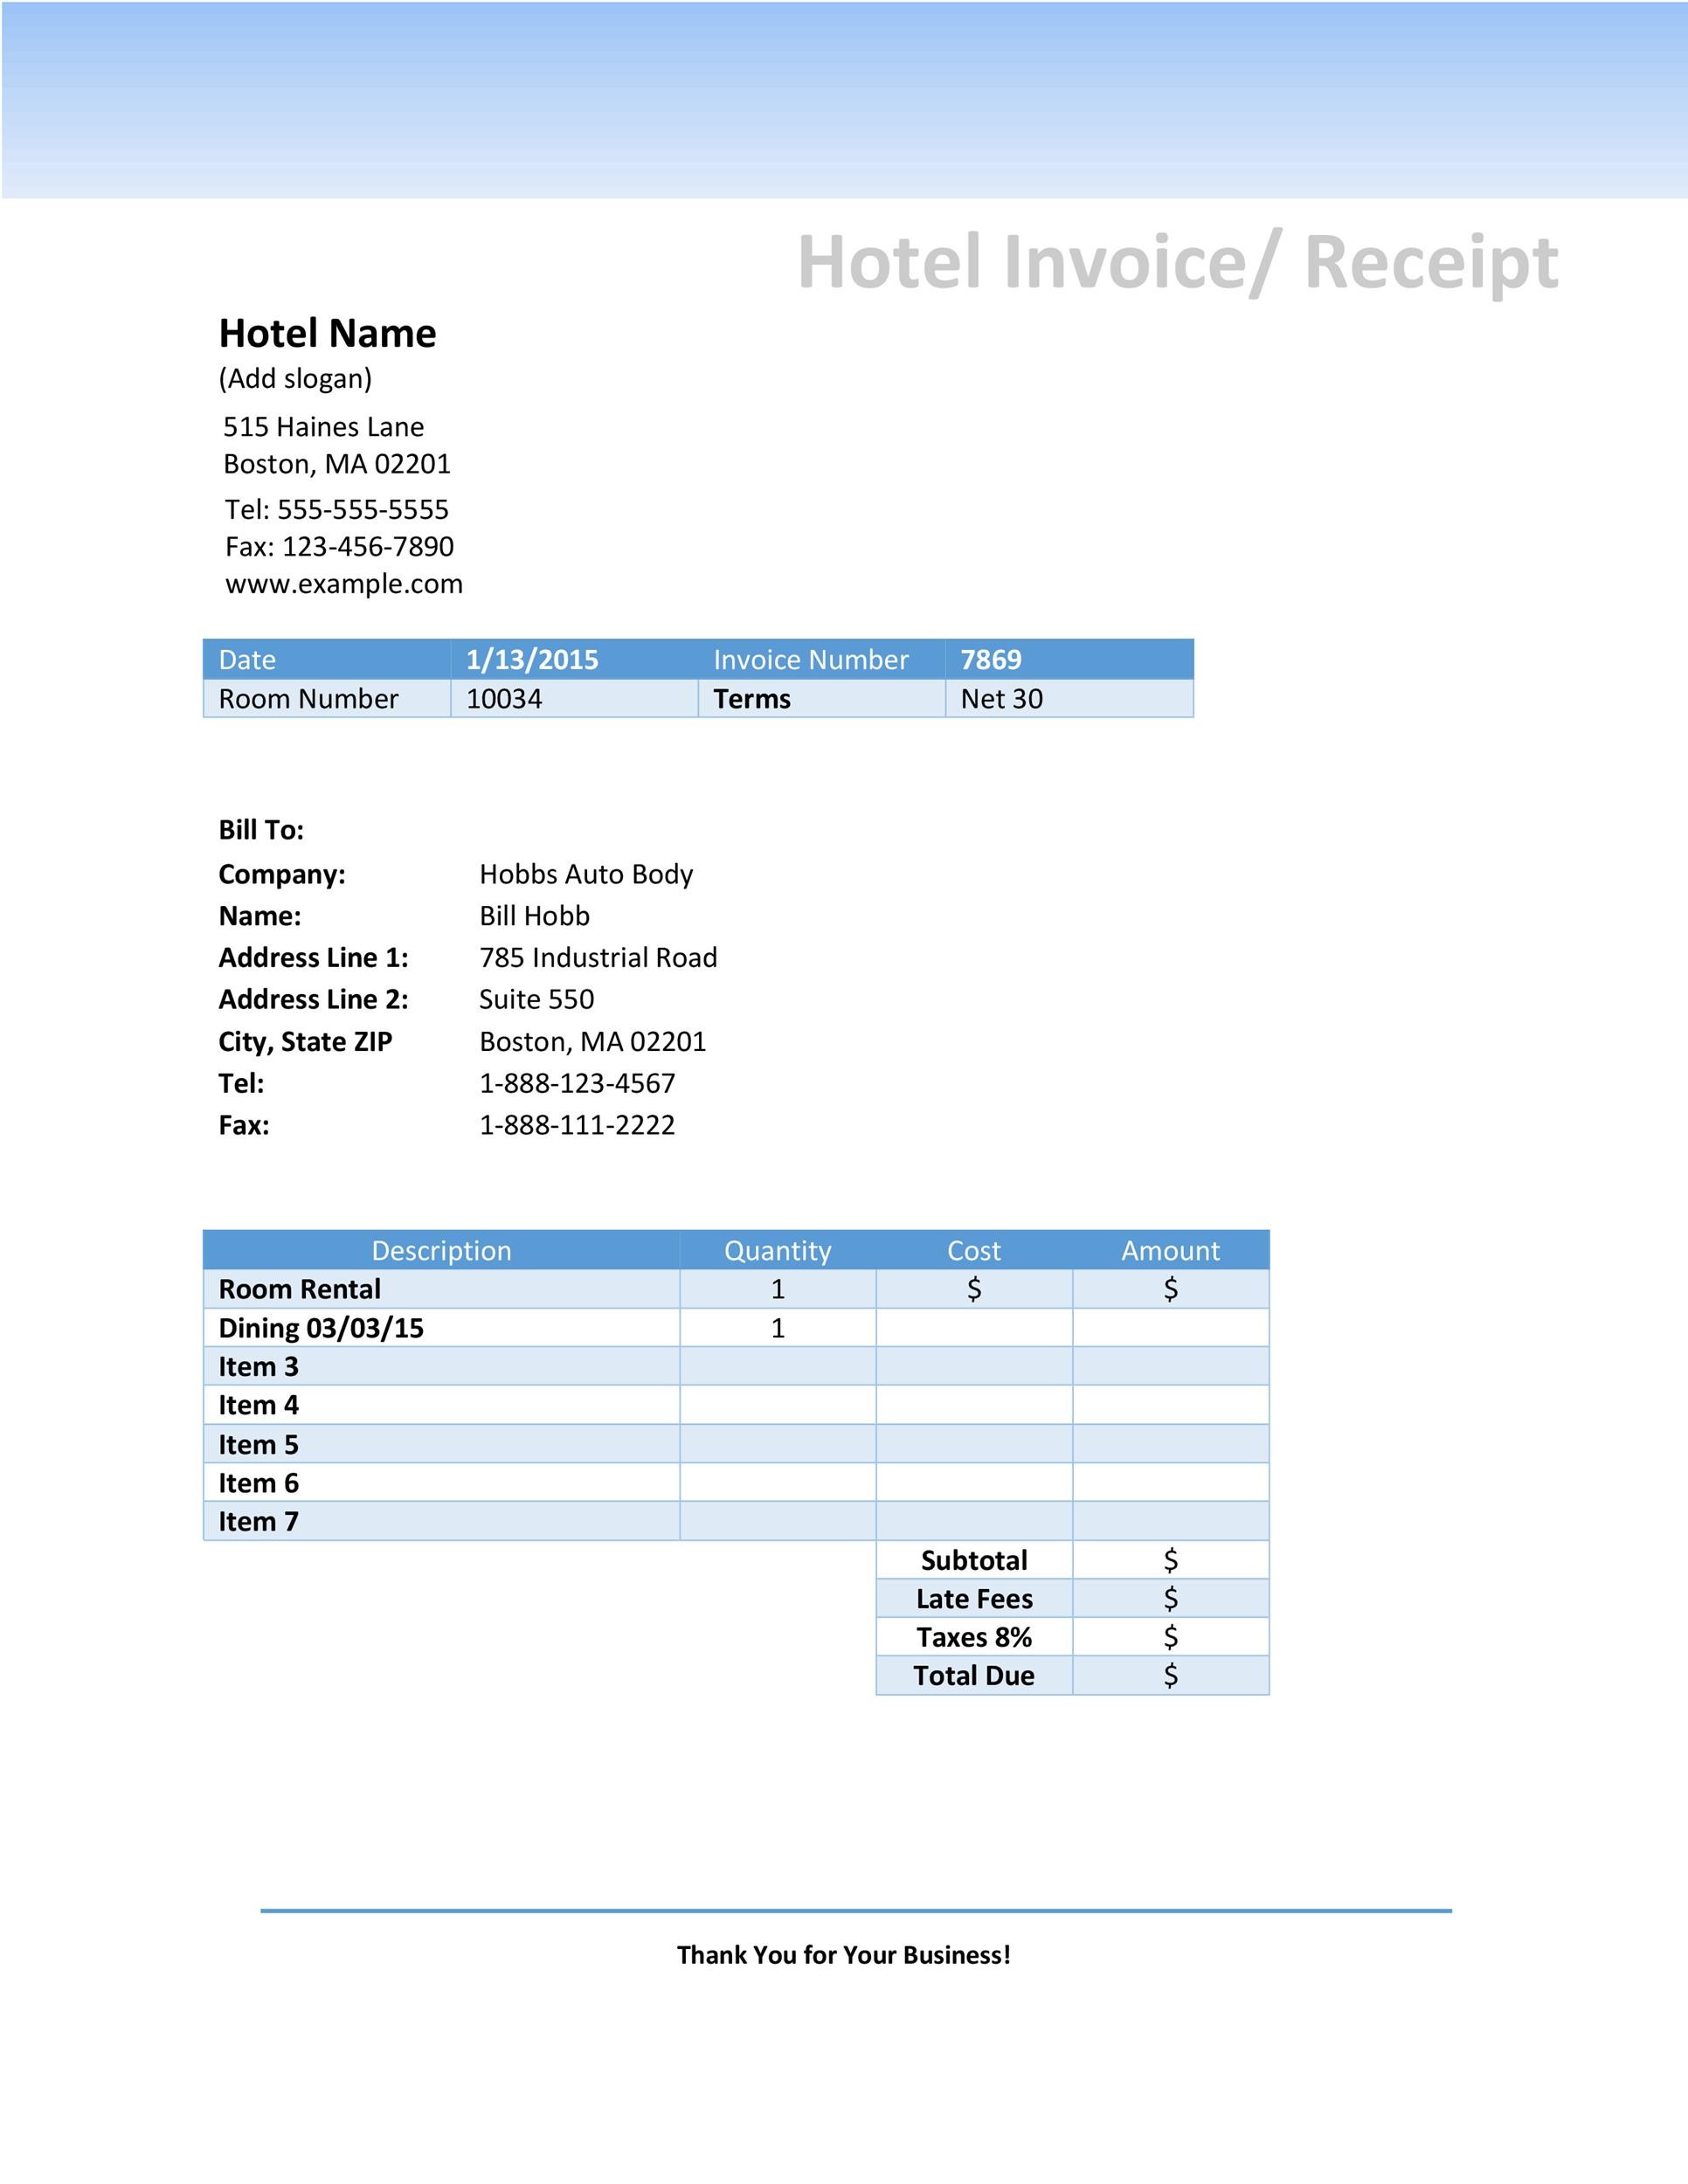 Hotel Receipt Template Excel